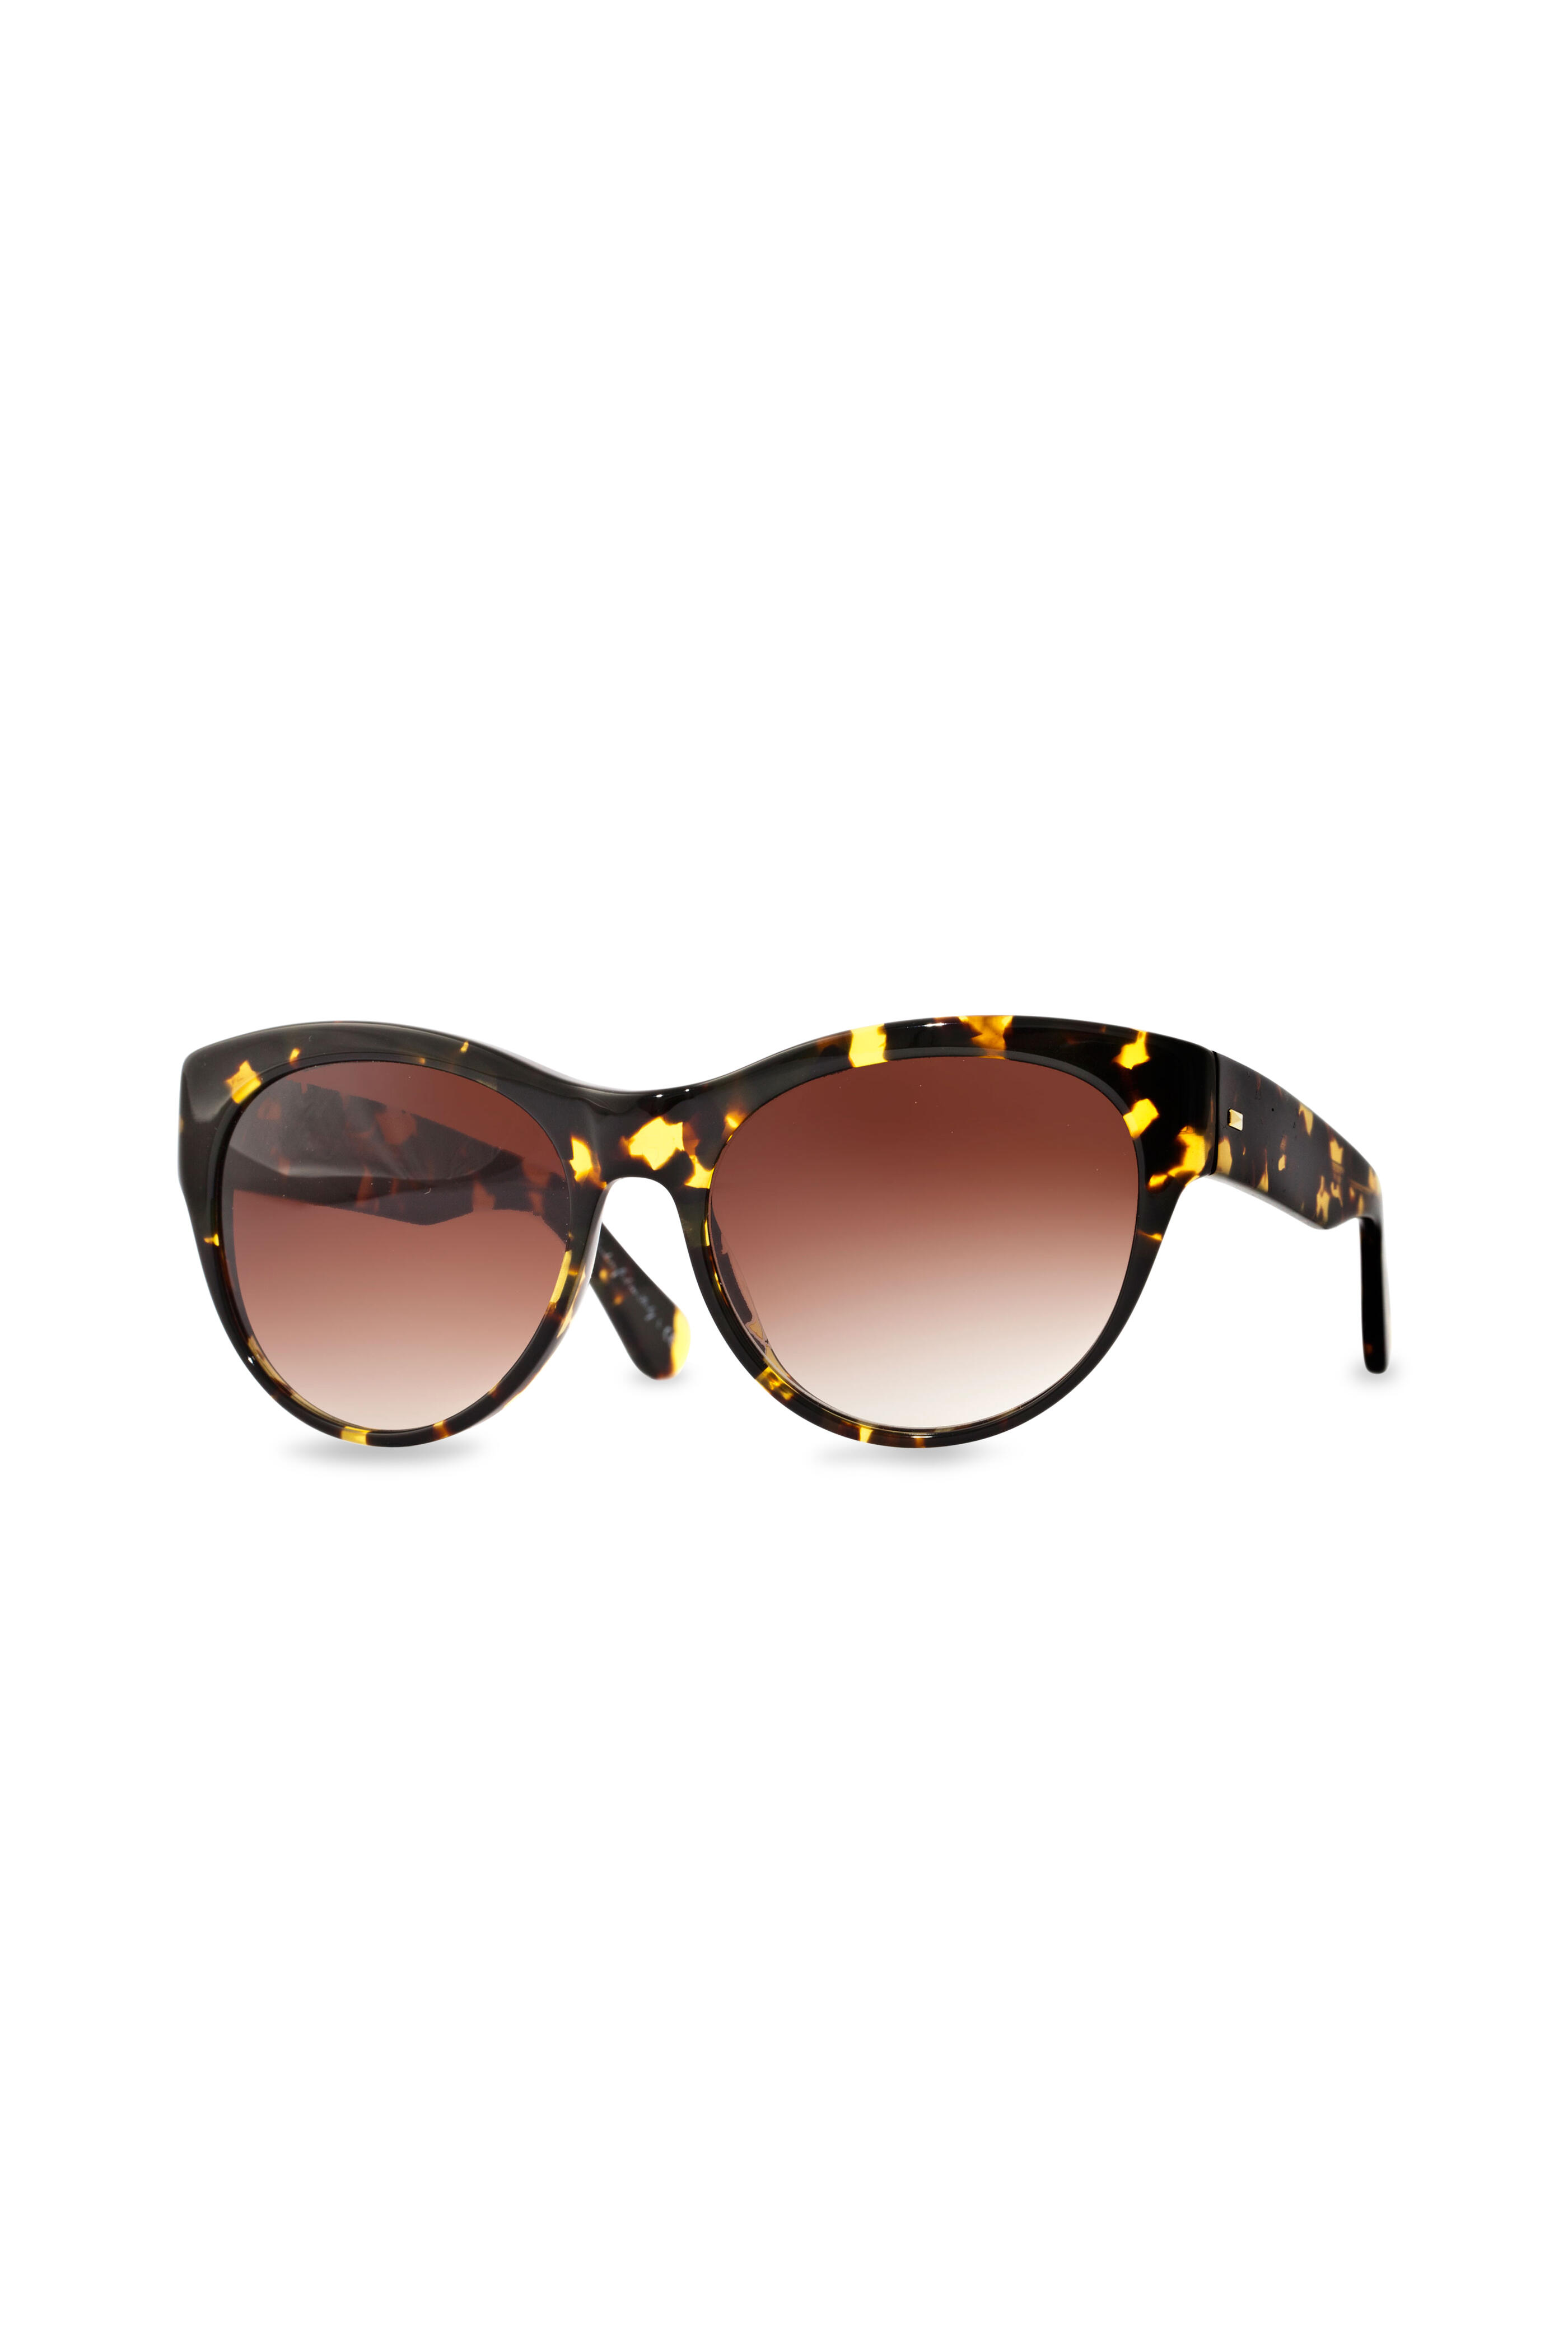 Oliver Peoples - Mande 55 Spice Brown Sunglasses